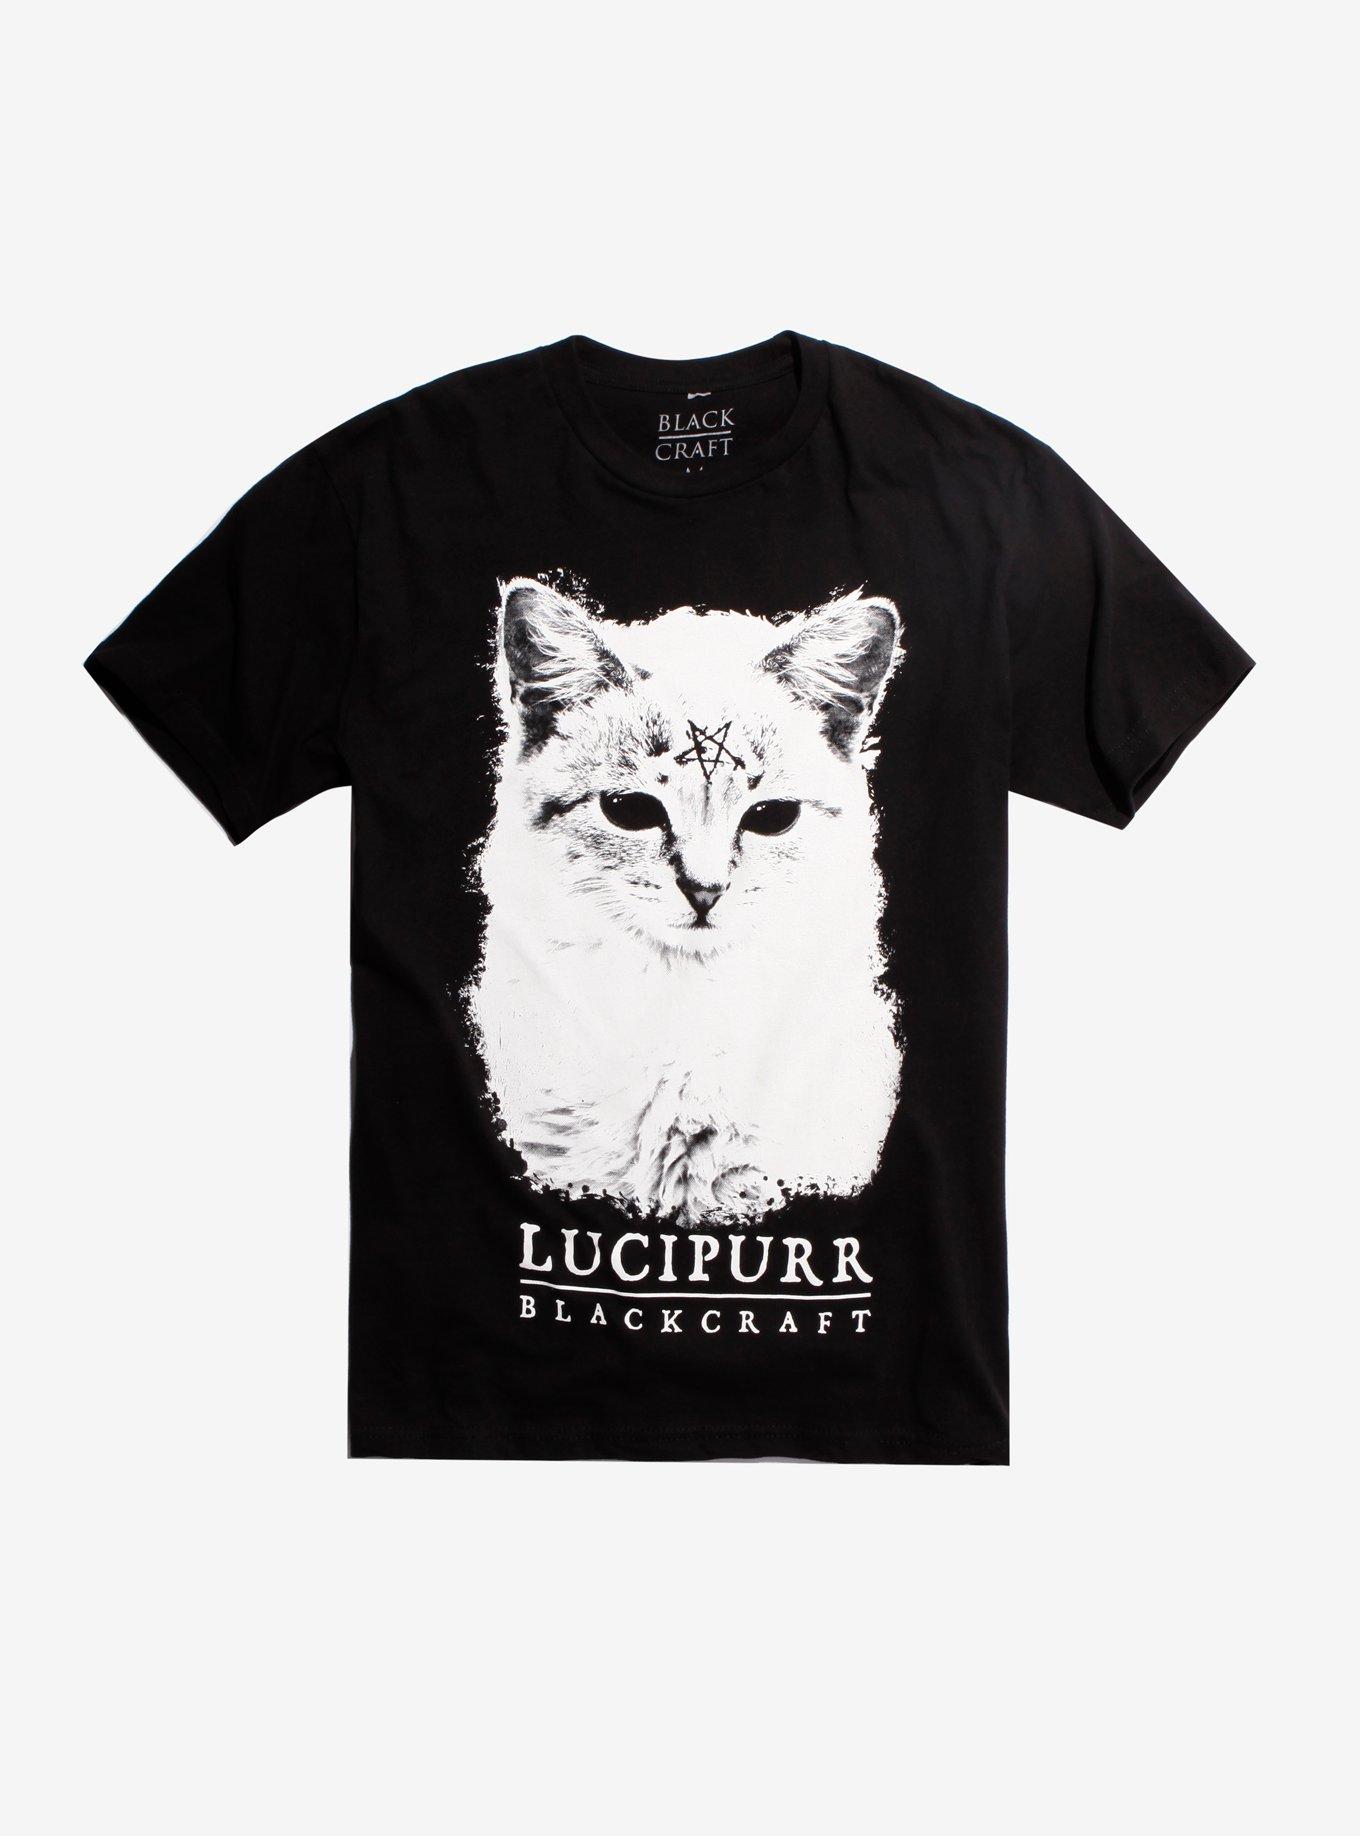 BlackCraft Lucipurr T-Shirt Hot Topic Exclusive, BLACK, hi-res